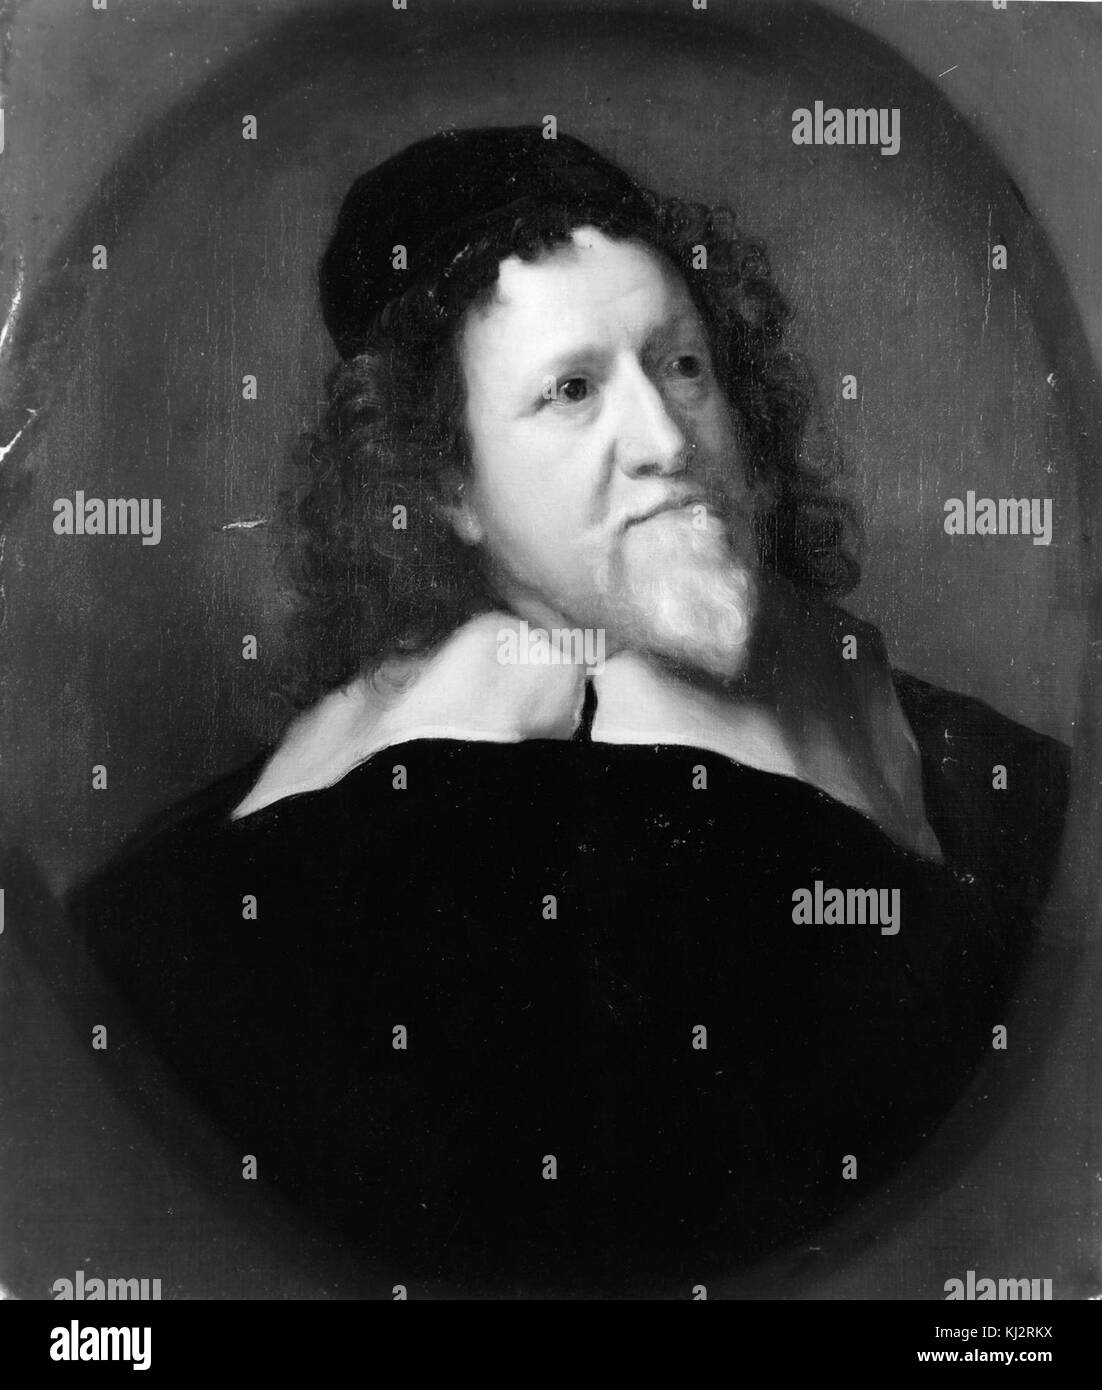 Anthony van Dyck - Busto di Inigo Jones - Walters 37803 Foto Stock